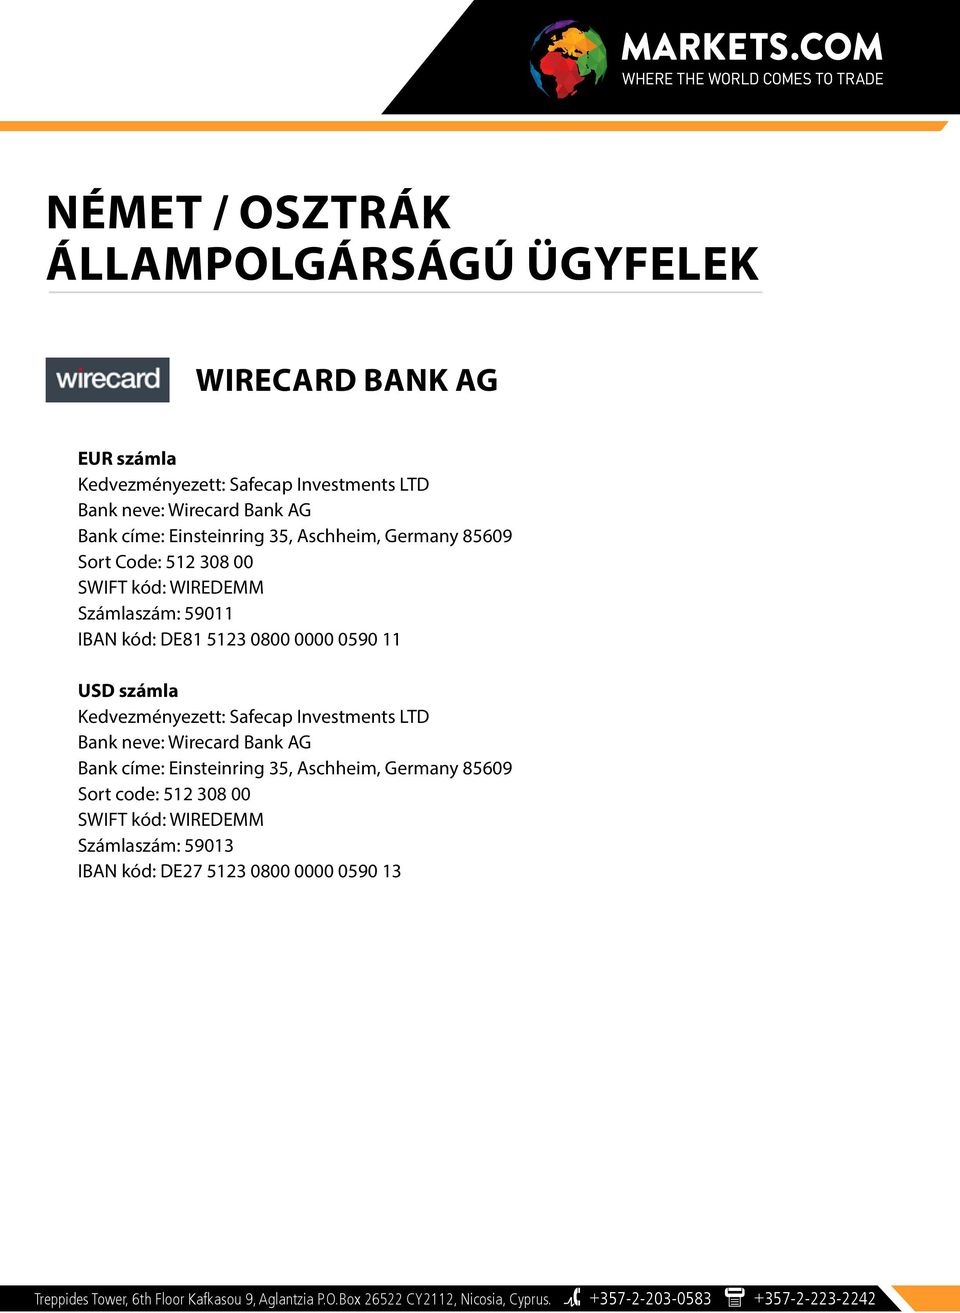 IBAN kód: DE81 5123 0800 0000 0590 11 Bank neve: Wirecard Bank AG Bank címe: Einsteinring 35, Aschheim,